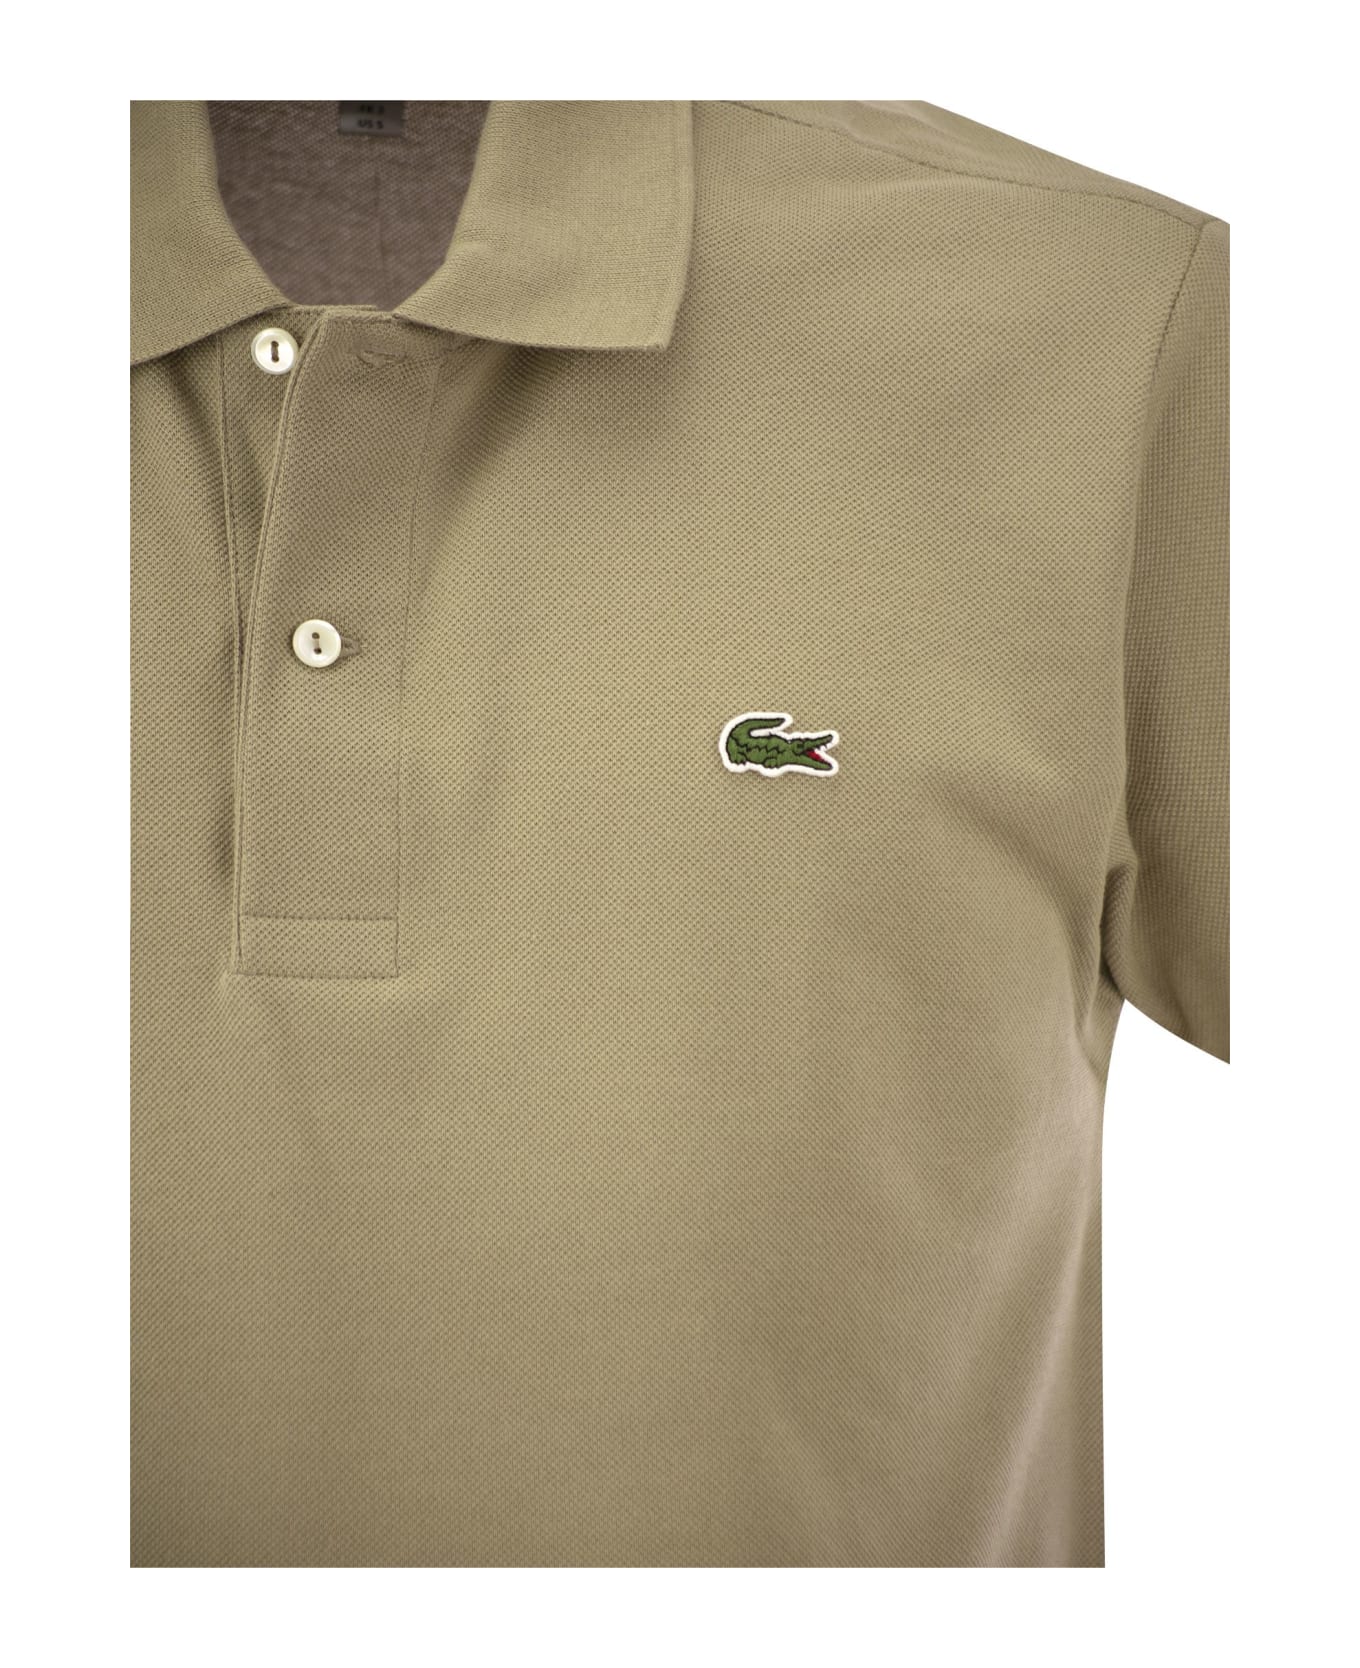 Lacoste Classic Fit Cotton Pique Polo Shirt - Corda